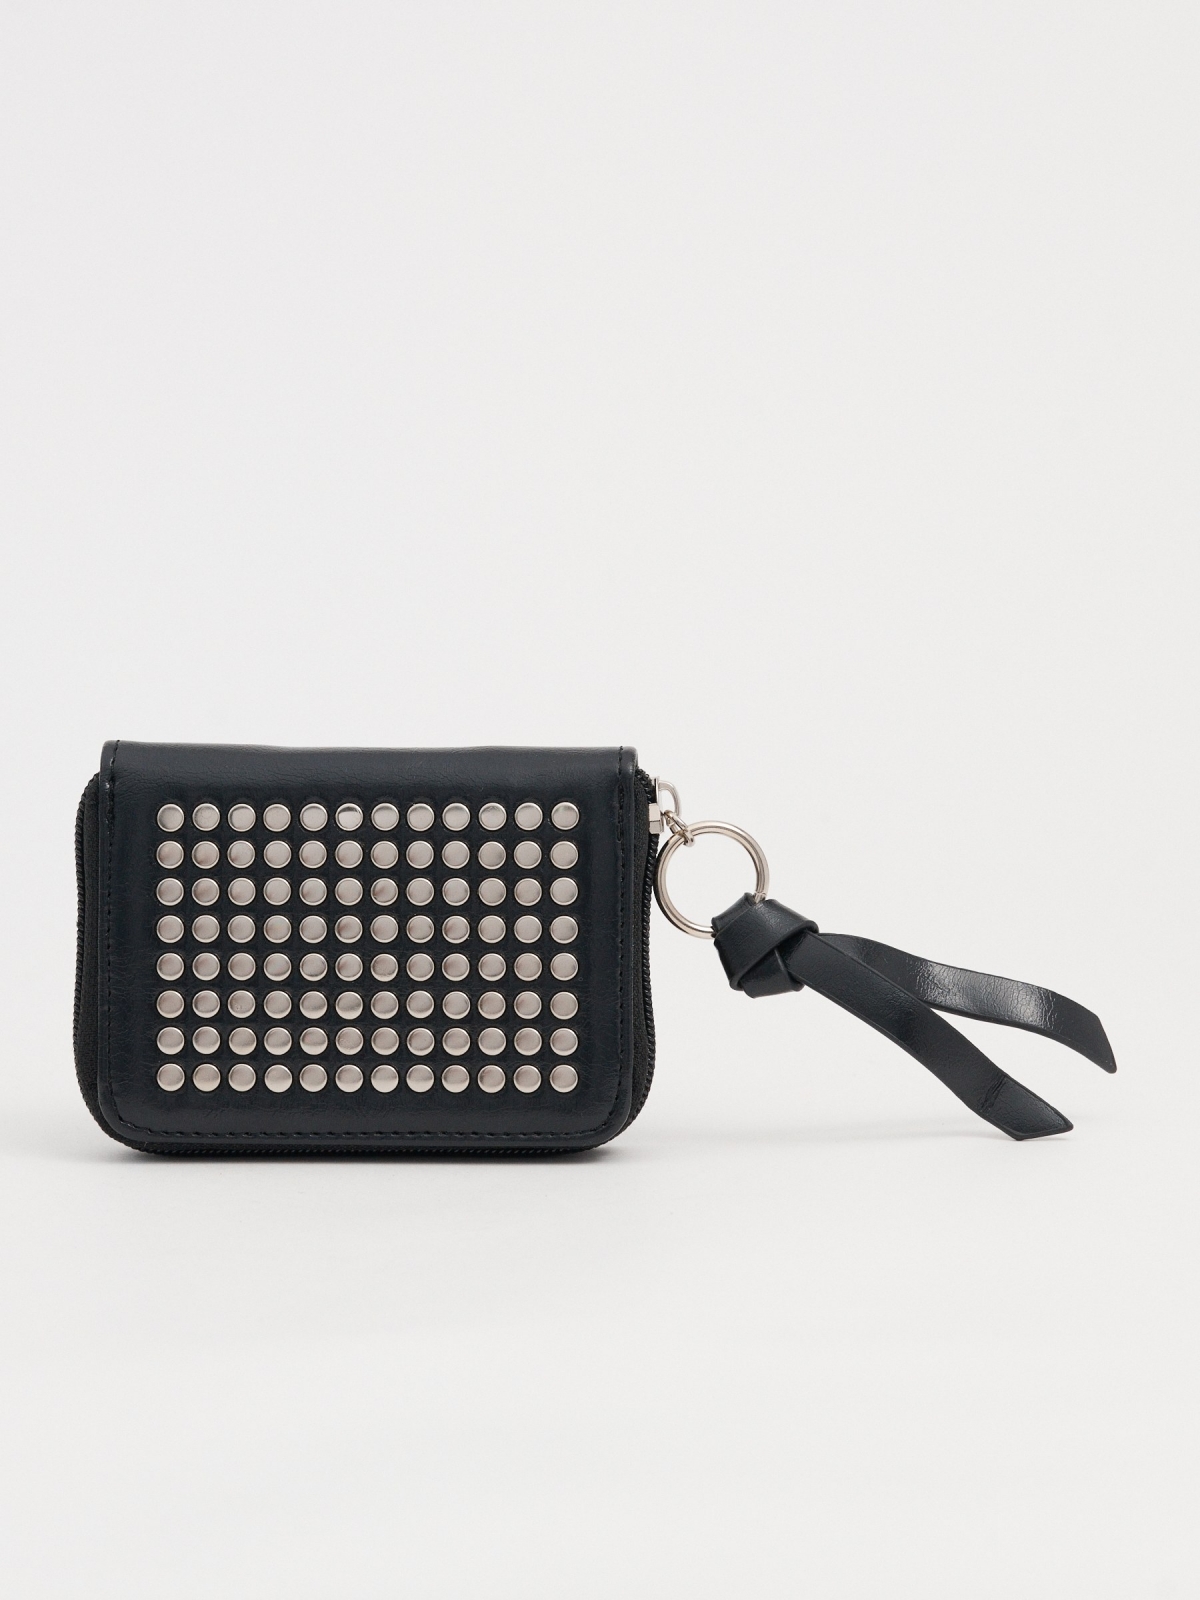 Studded purse black